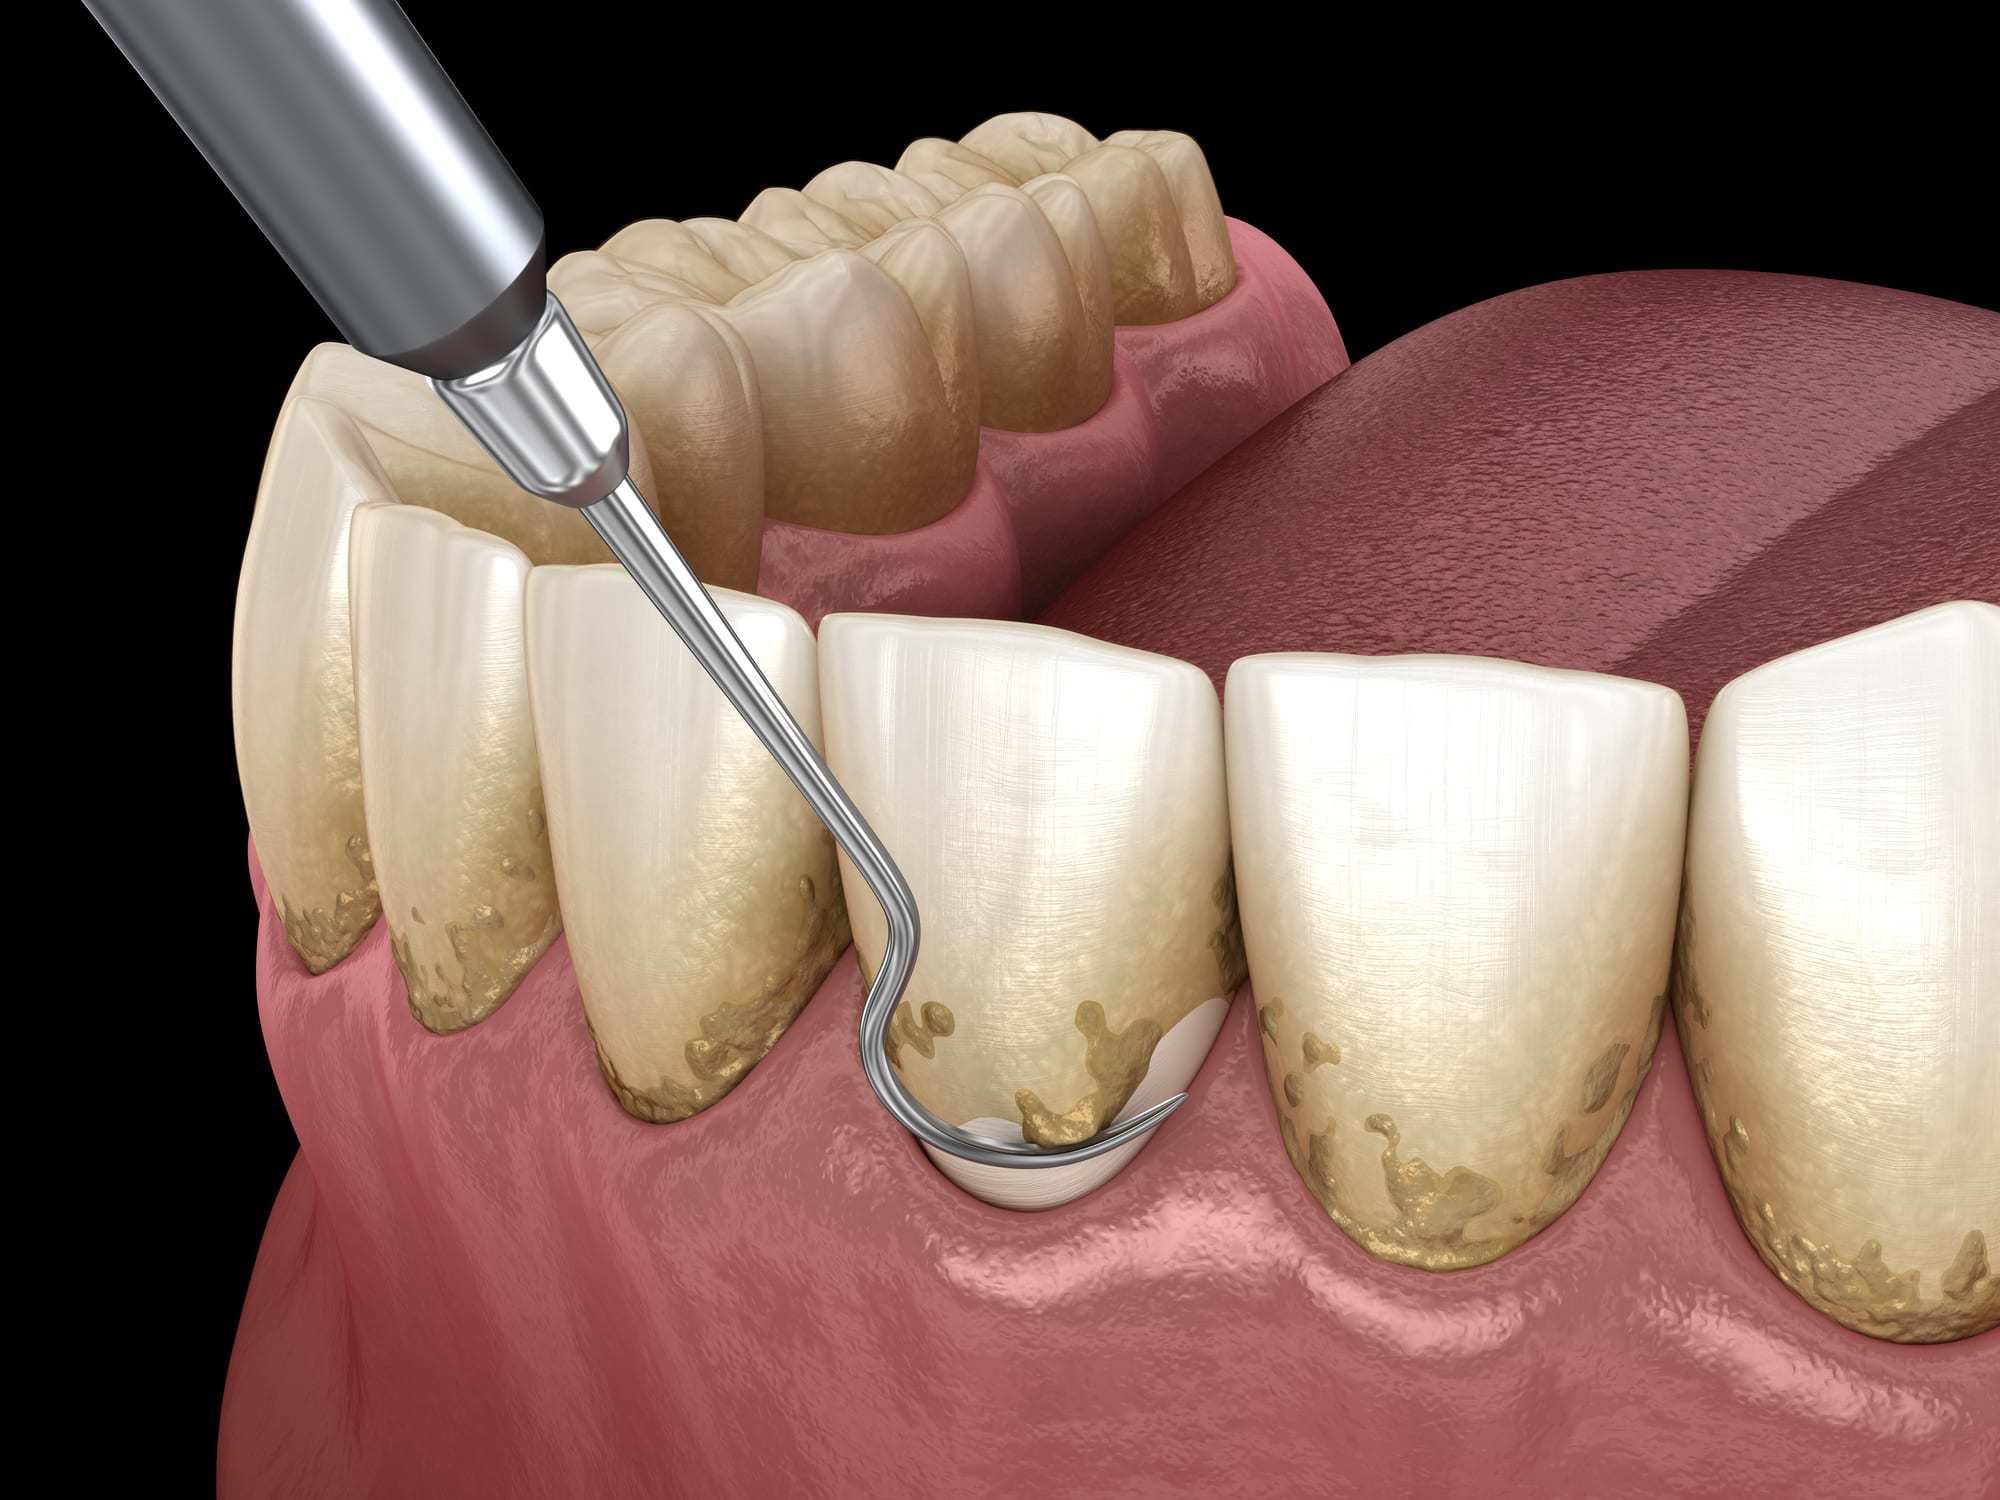 Caling Harmful For Dental Health